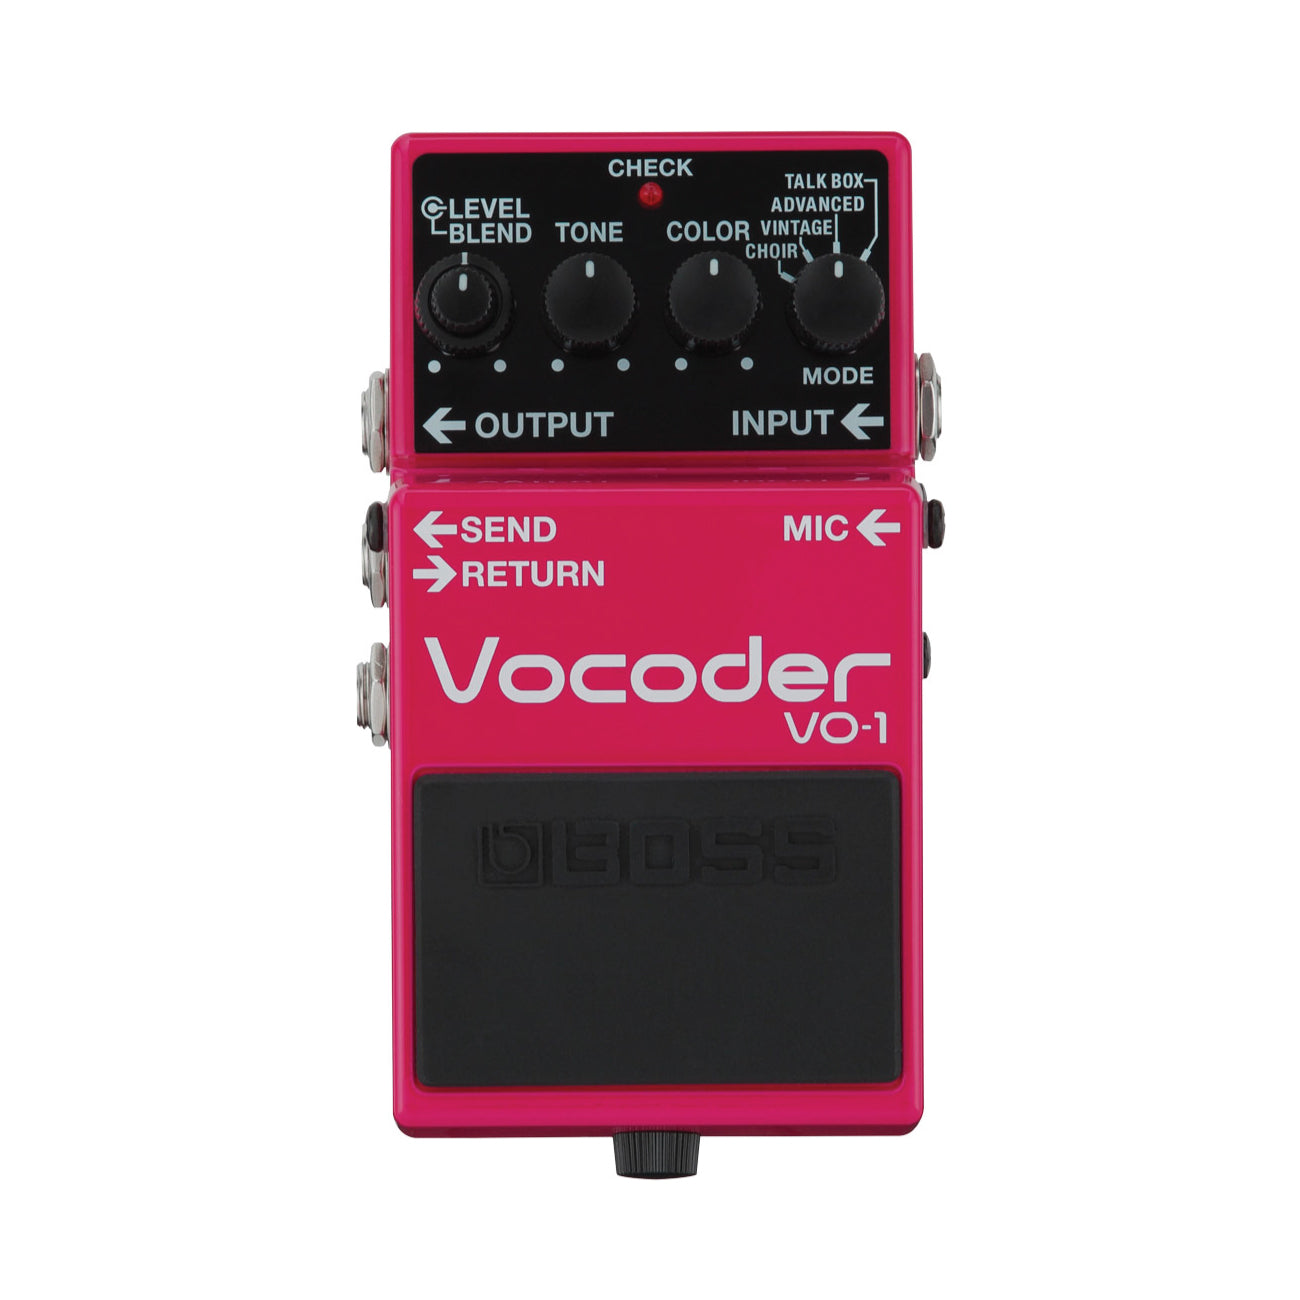 BOSS VO-1 Vocoder